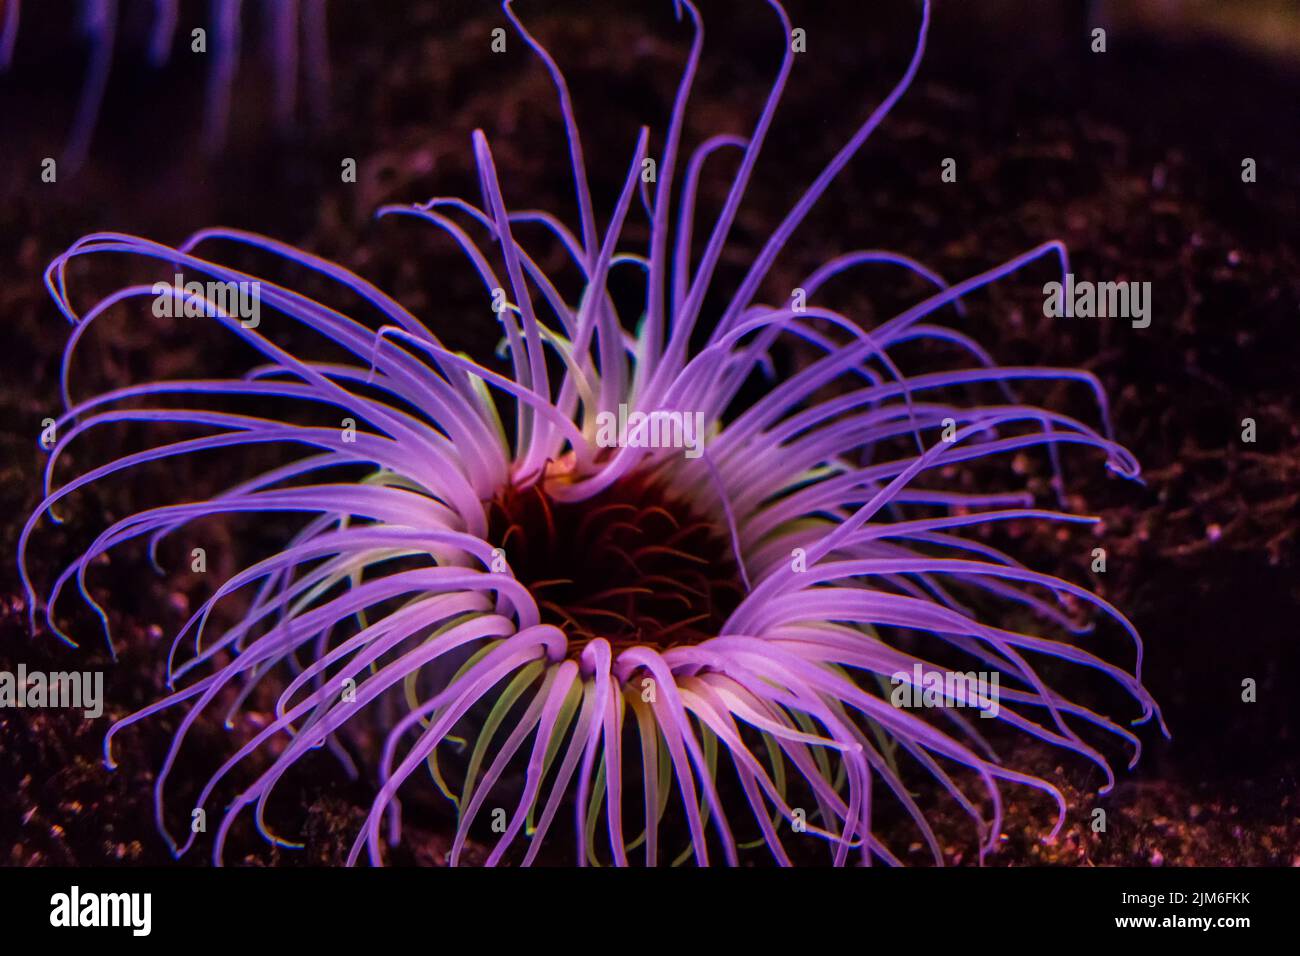 Eine lila Anemone im Aquarium Stock Photo